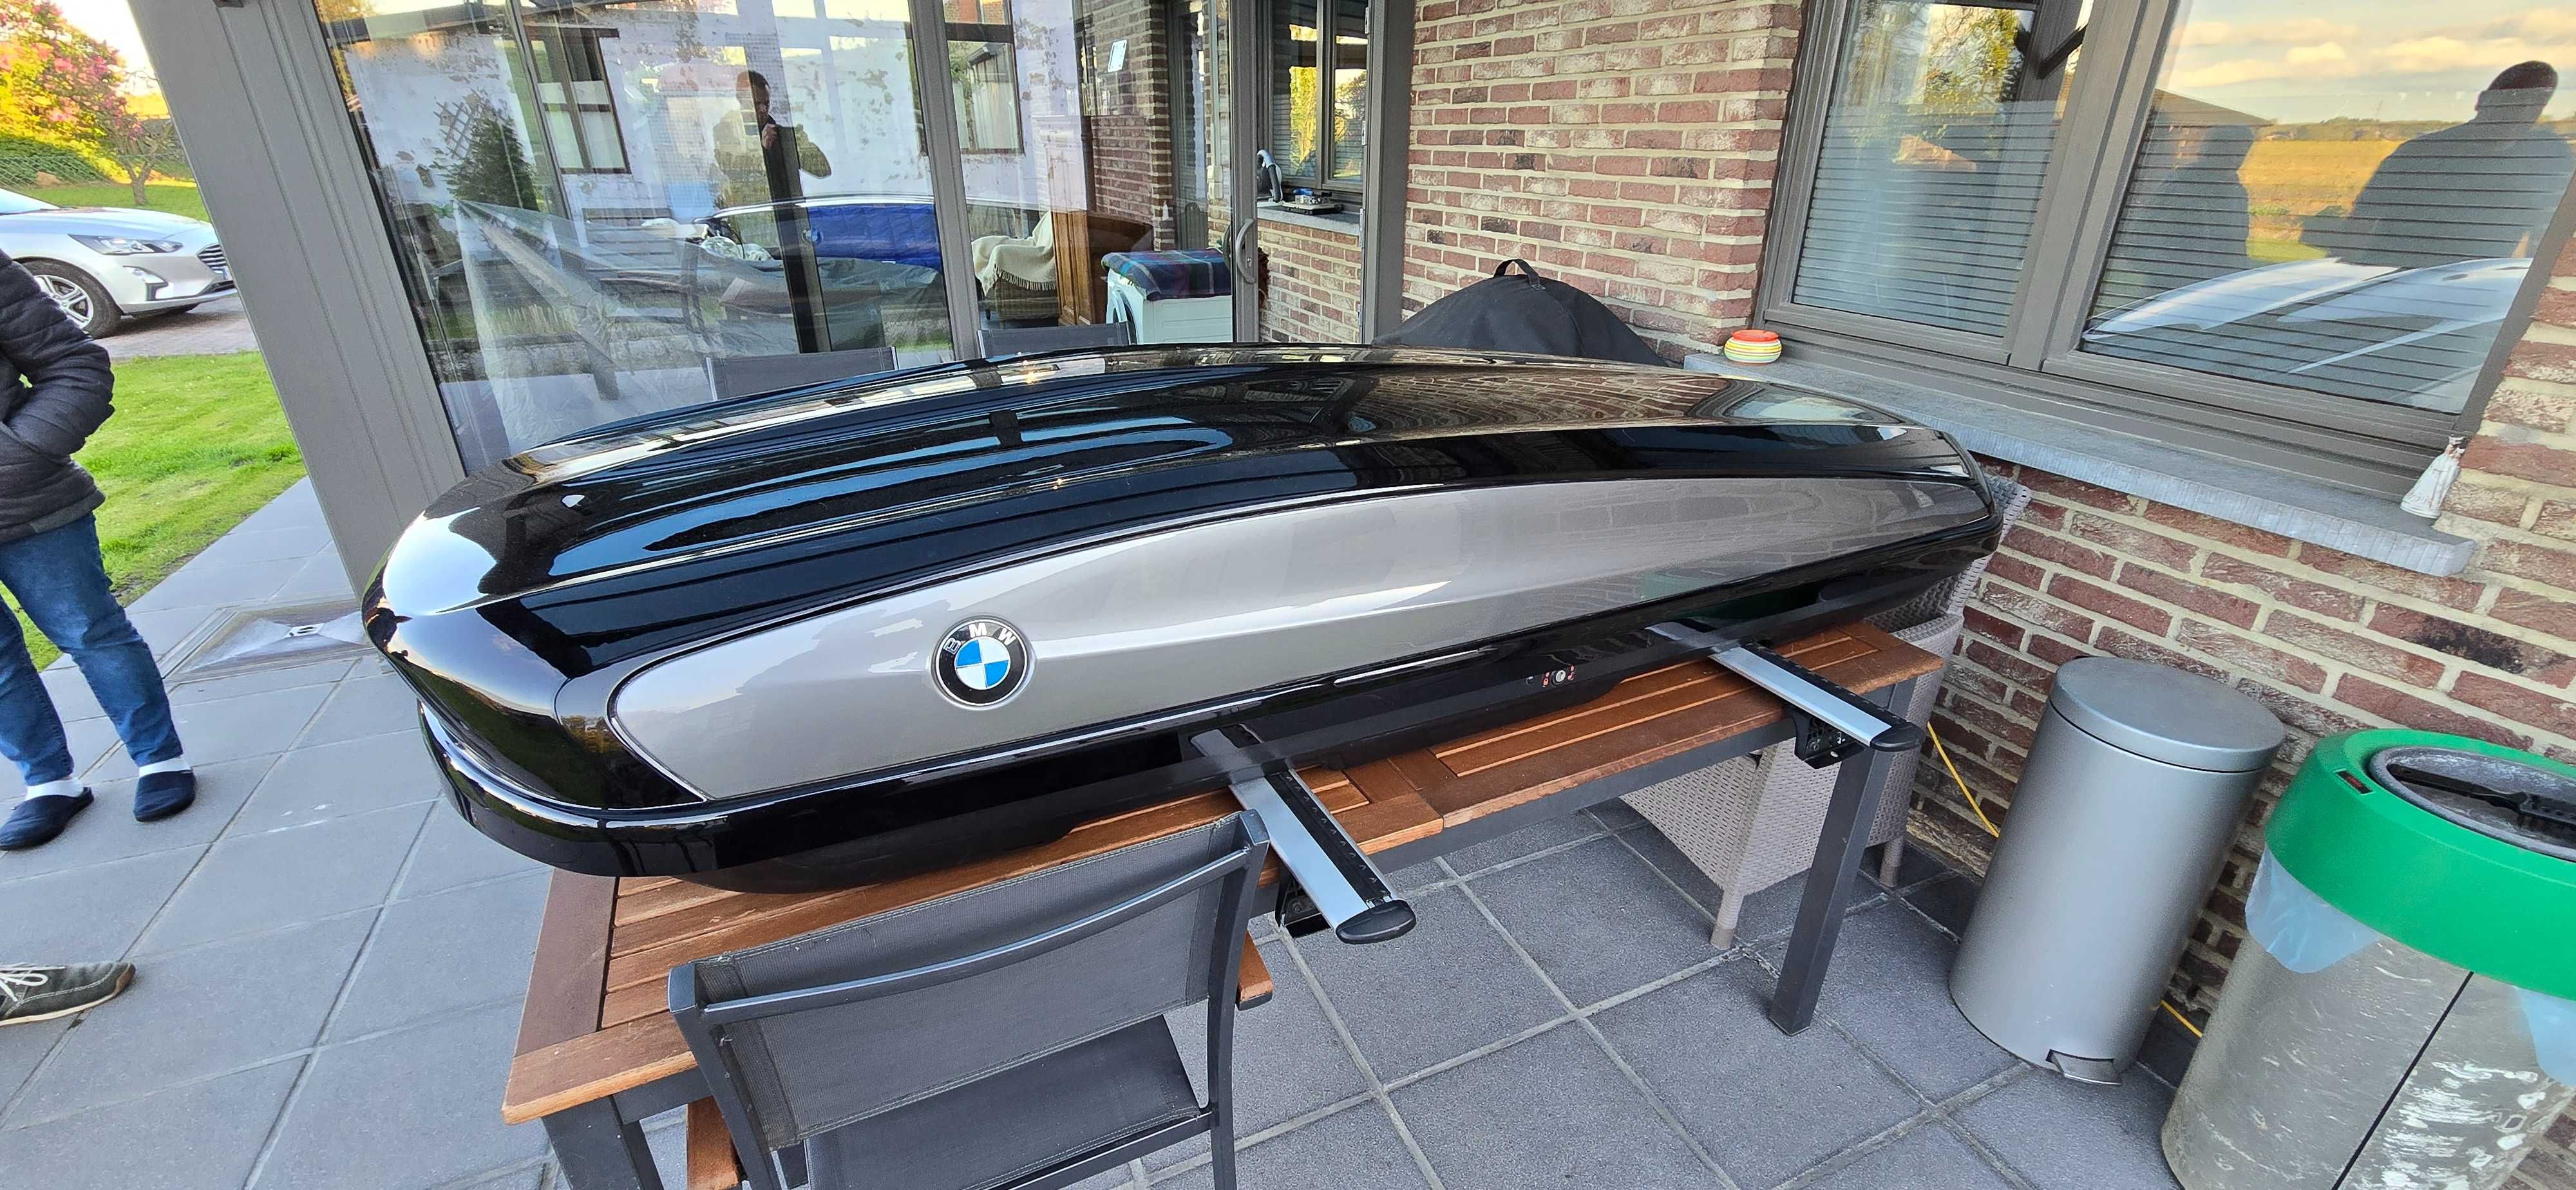 Bagażnik dachowy BMW 520, czarny